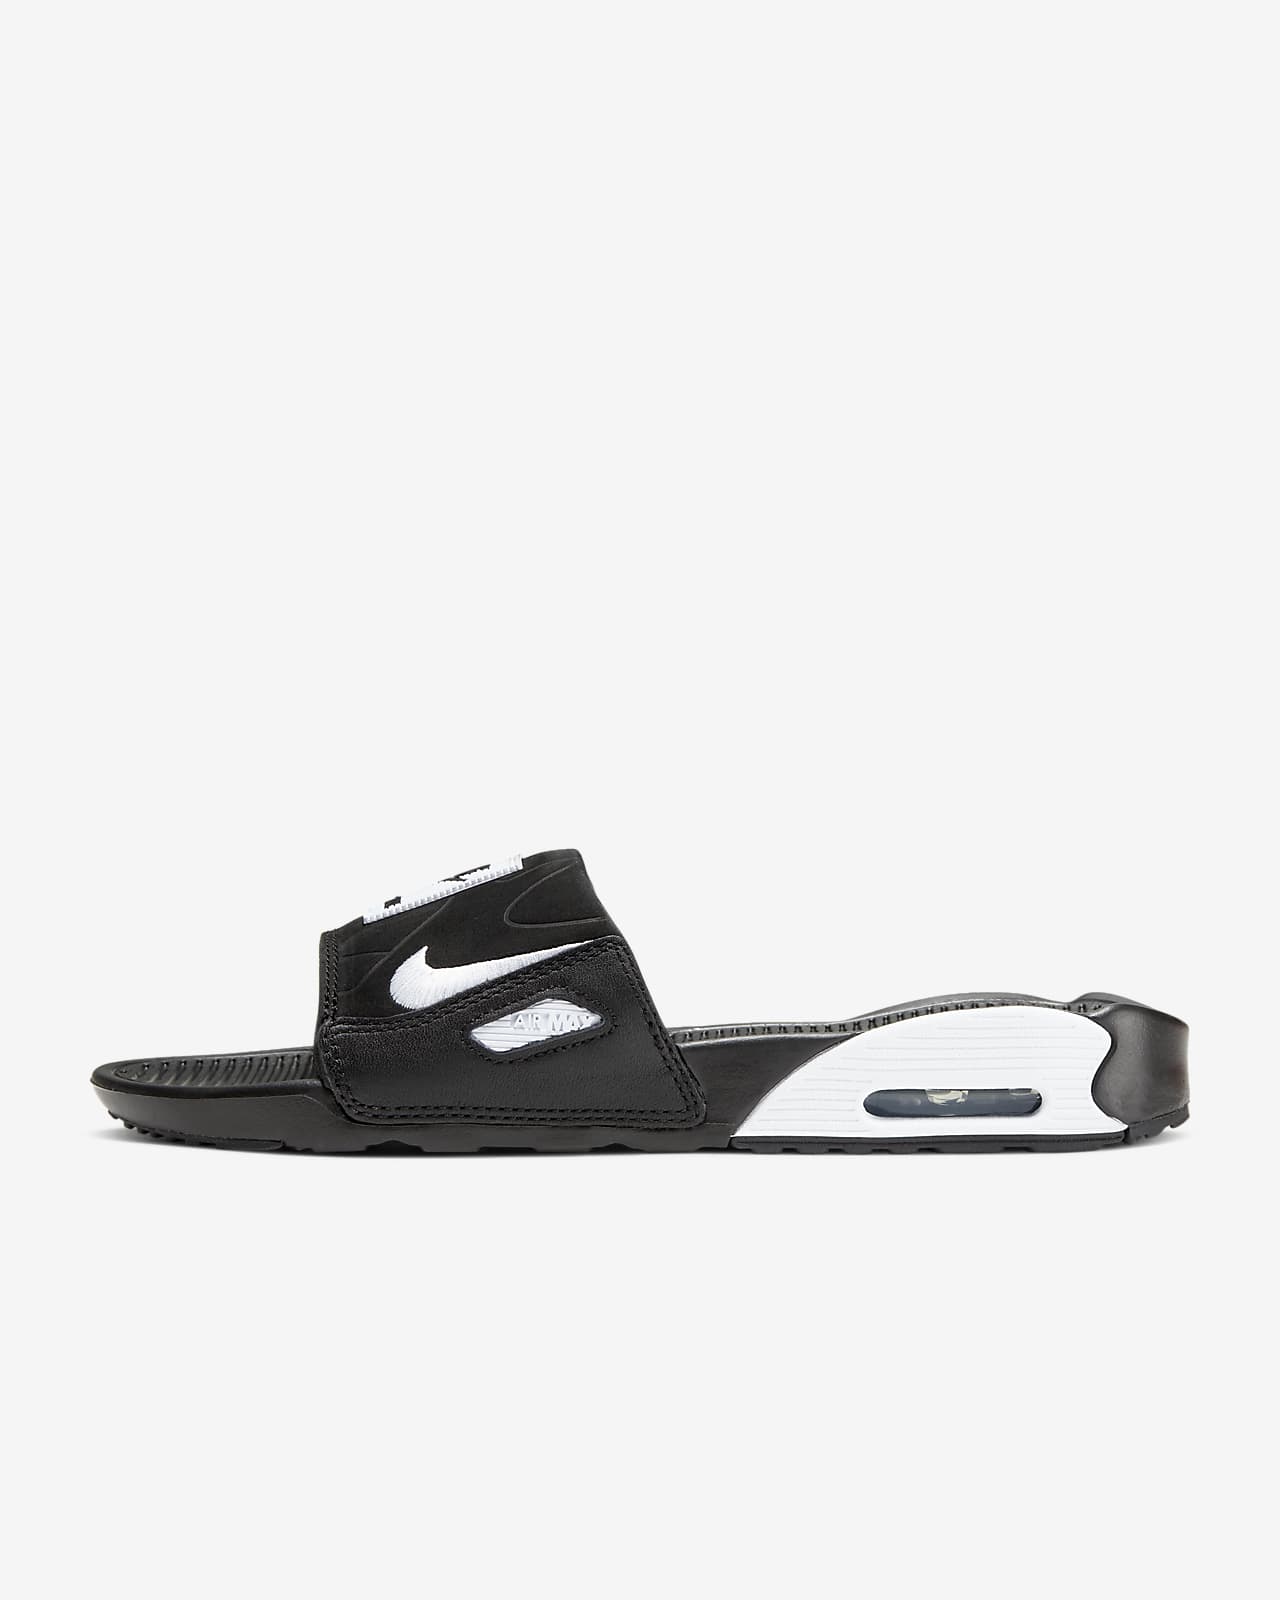 nike tanjun black and white sandals